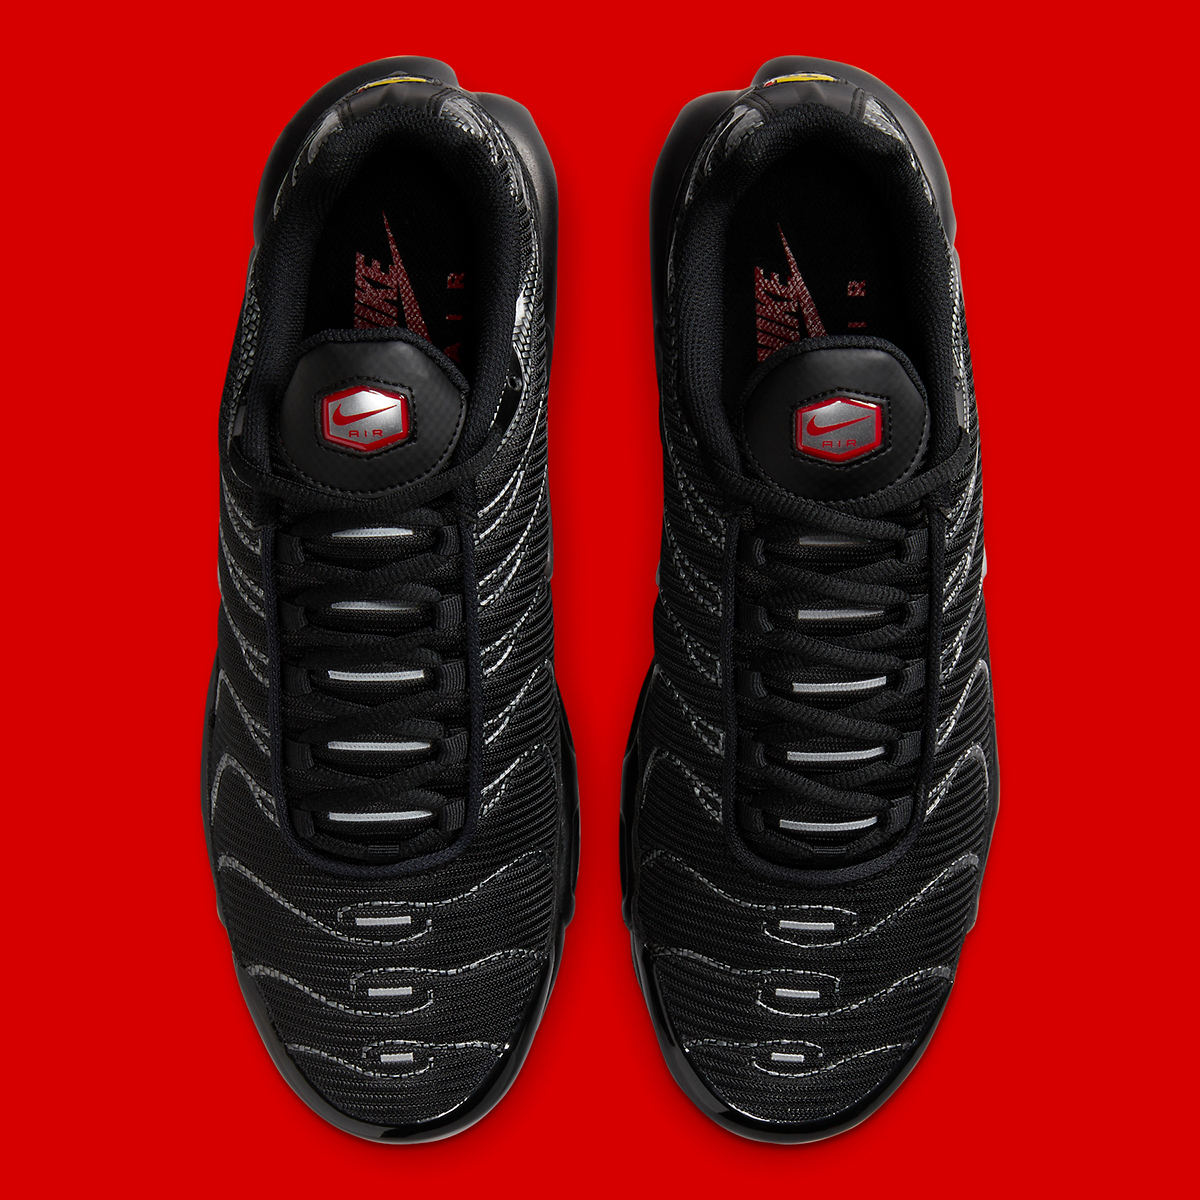 Nike popular nike sneakers 2015 grey hair color chart Black Red Carbon Fiber Hf4293 001 4